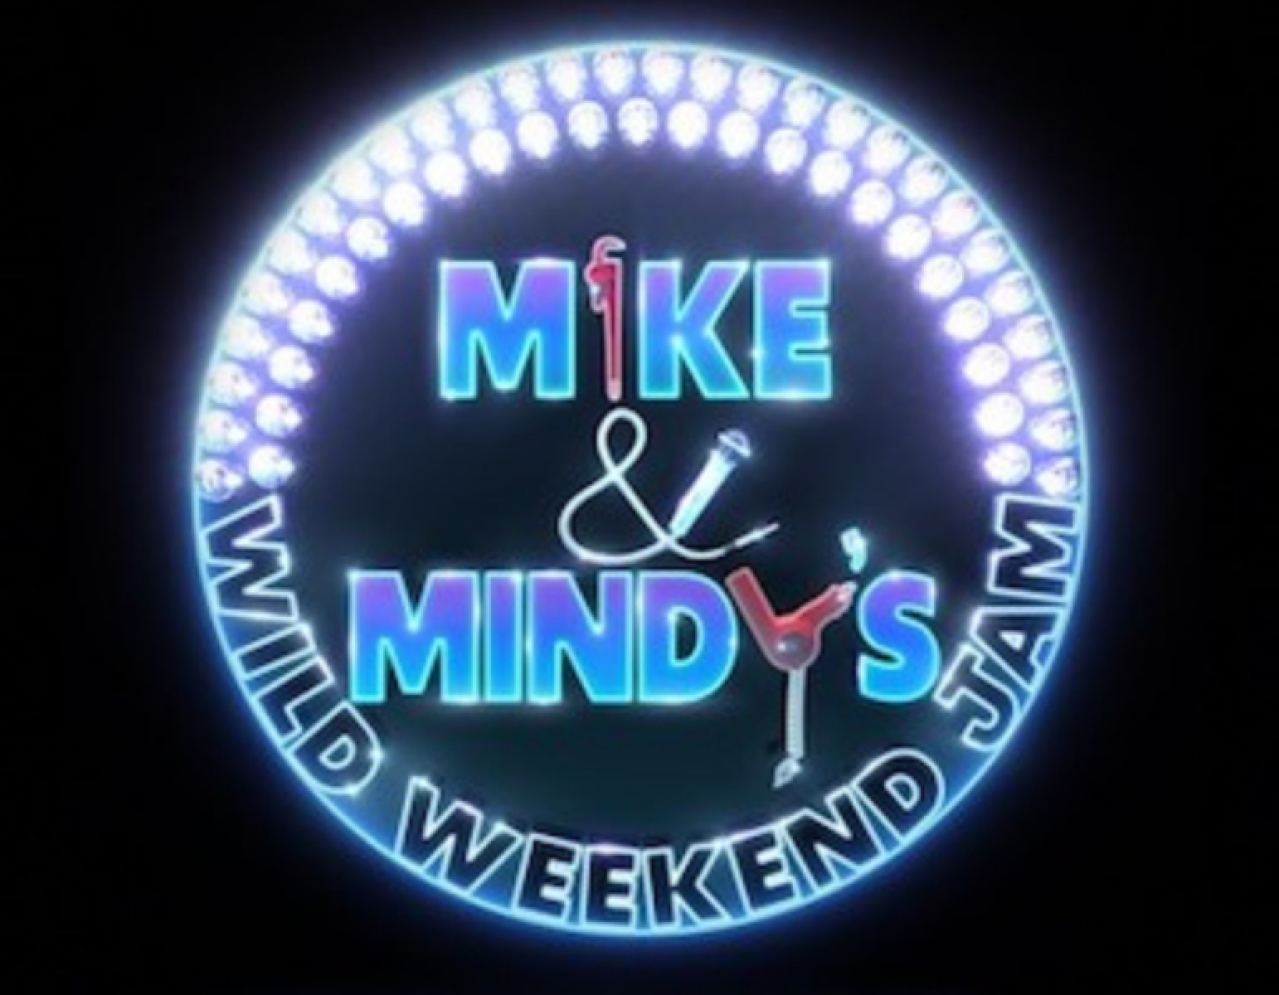 mike mindys wild weekend jam logo 94443